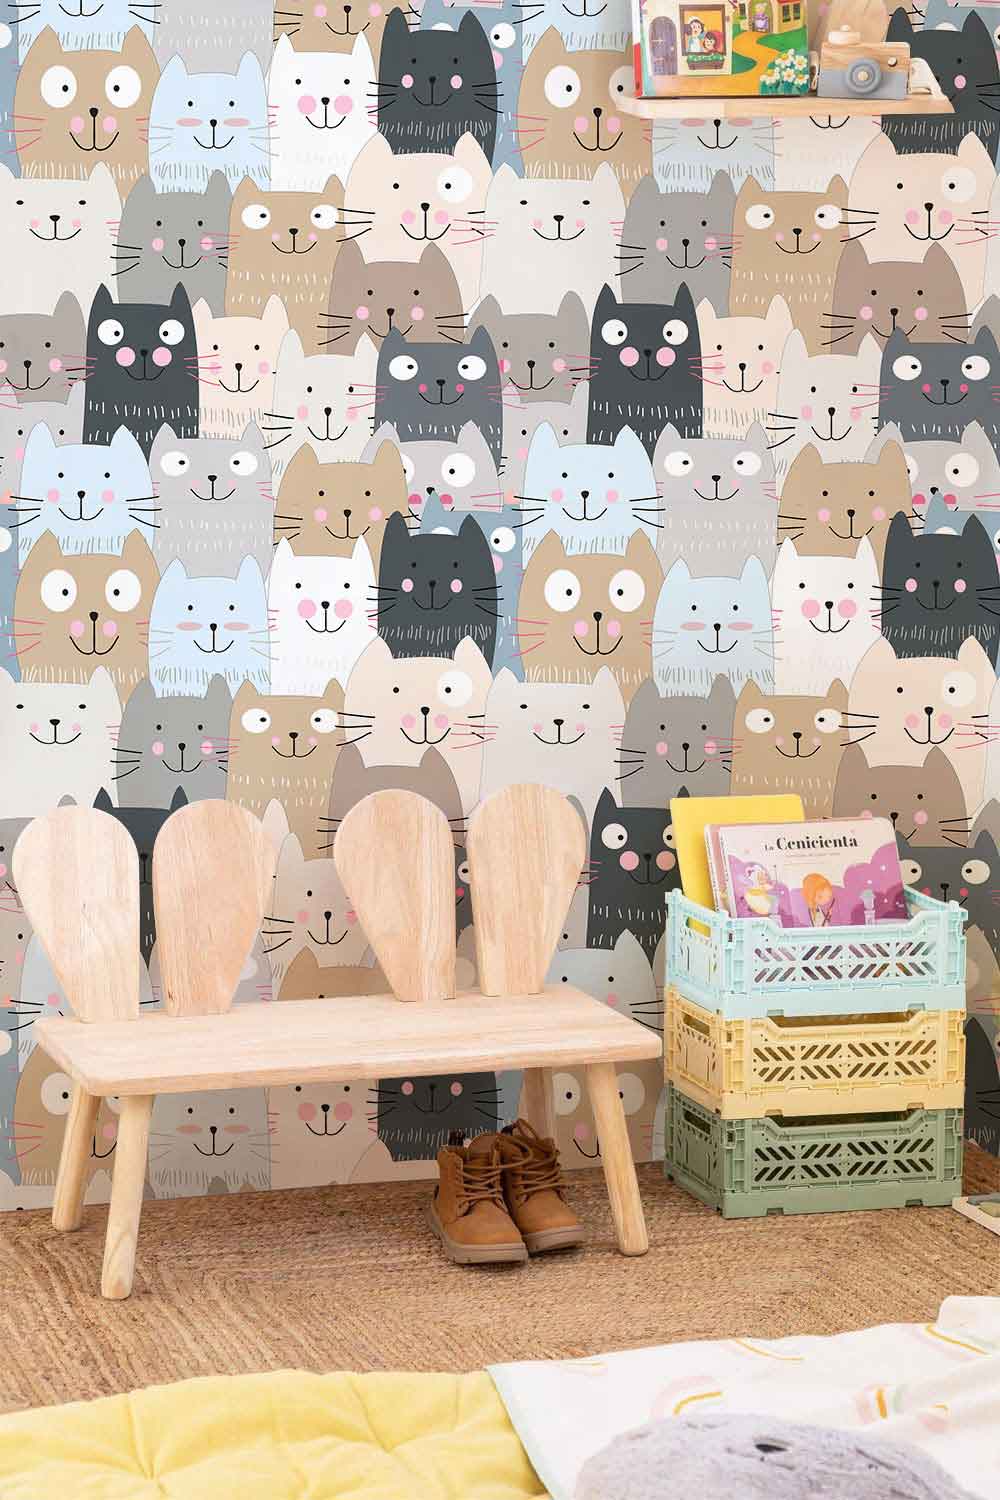 Smiling Cats cartoon wallpaper mural for living room